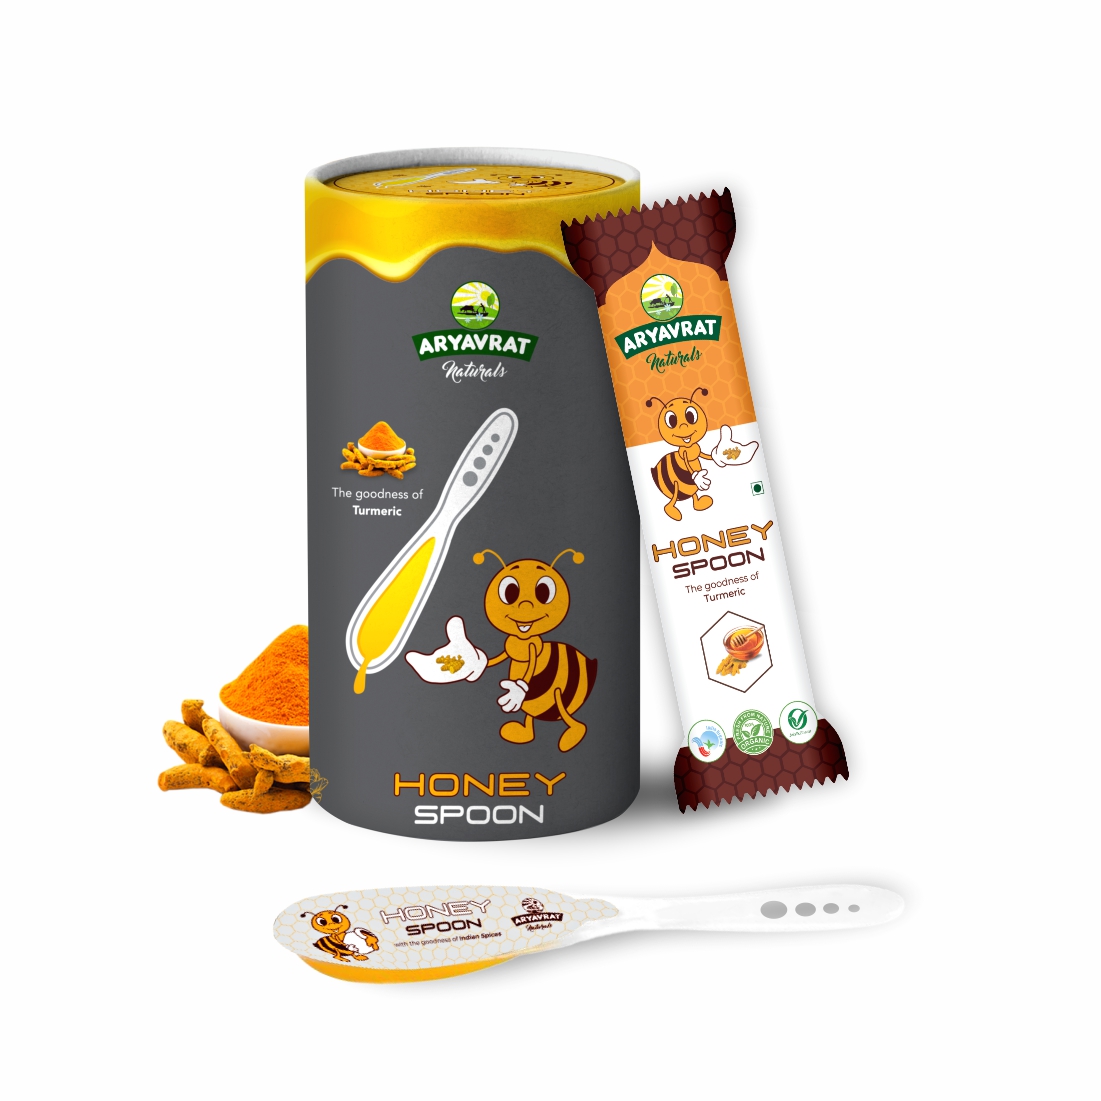 Buy Aryavrat Naturals - Turmeric- Haldi Honey Spoon 100% Pure Organic and Natural Pack of Honey Spoons at Best Price Online